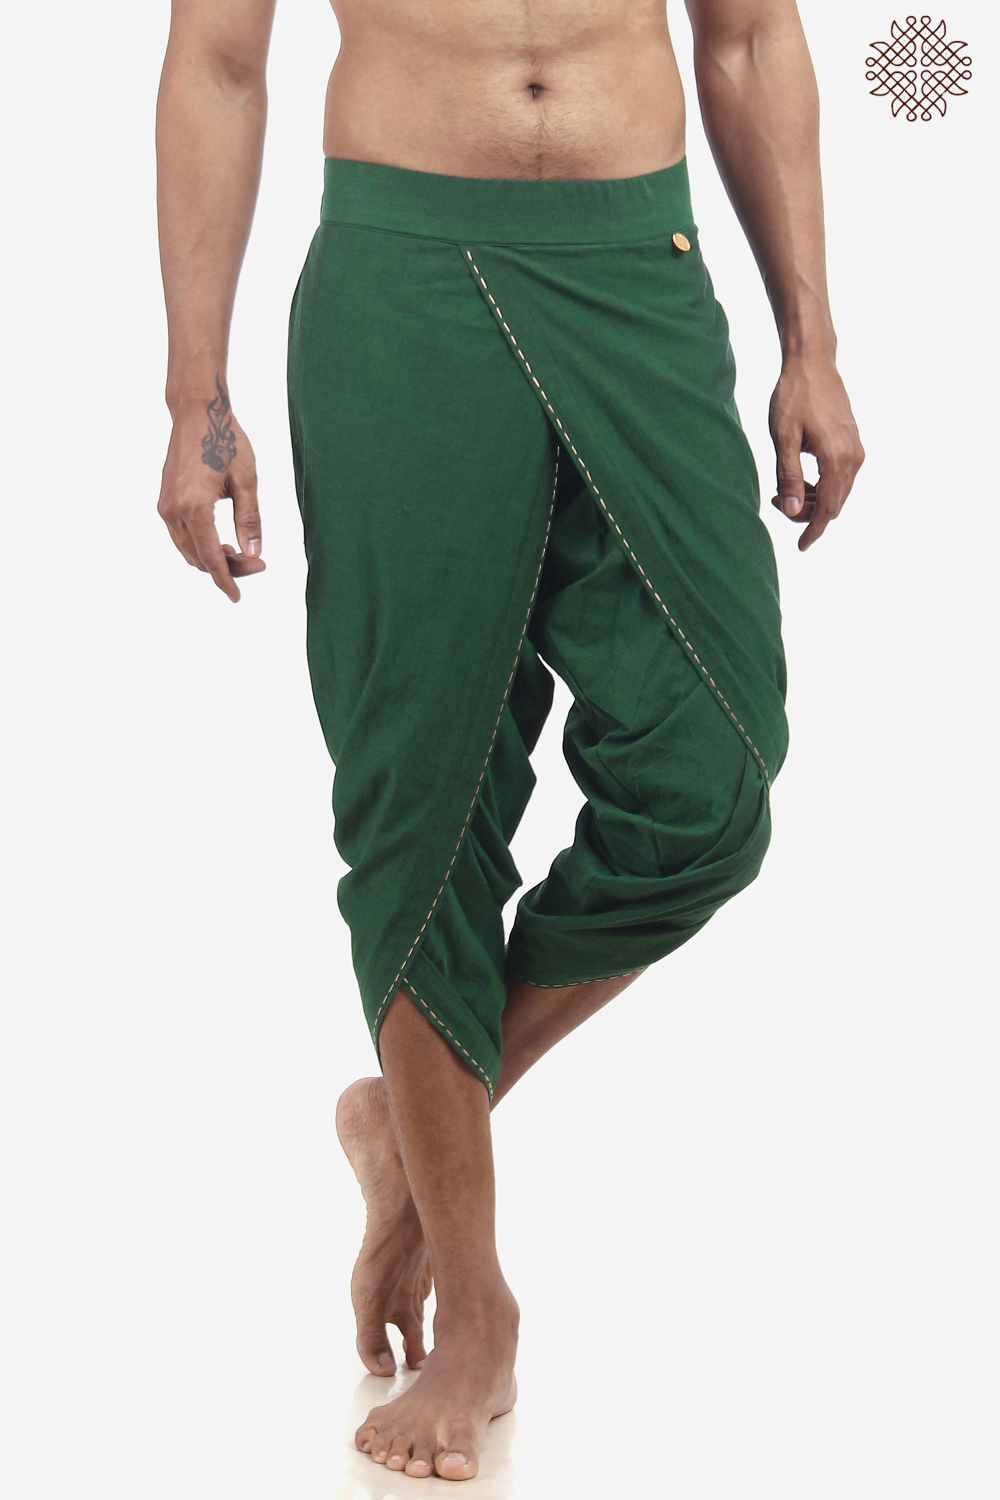 eloria Men's Dhoti Indian Men's Rayon Dhoti Aladdin Style Pants, Color:  Yellow | Free Size - Walmart.com